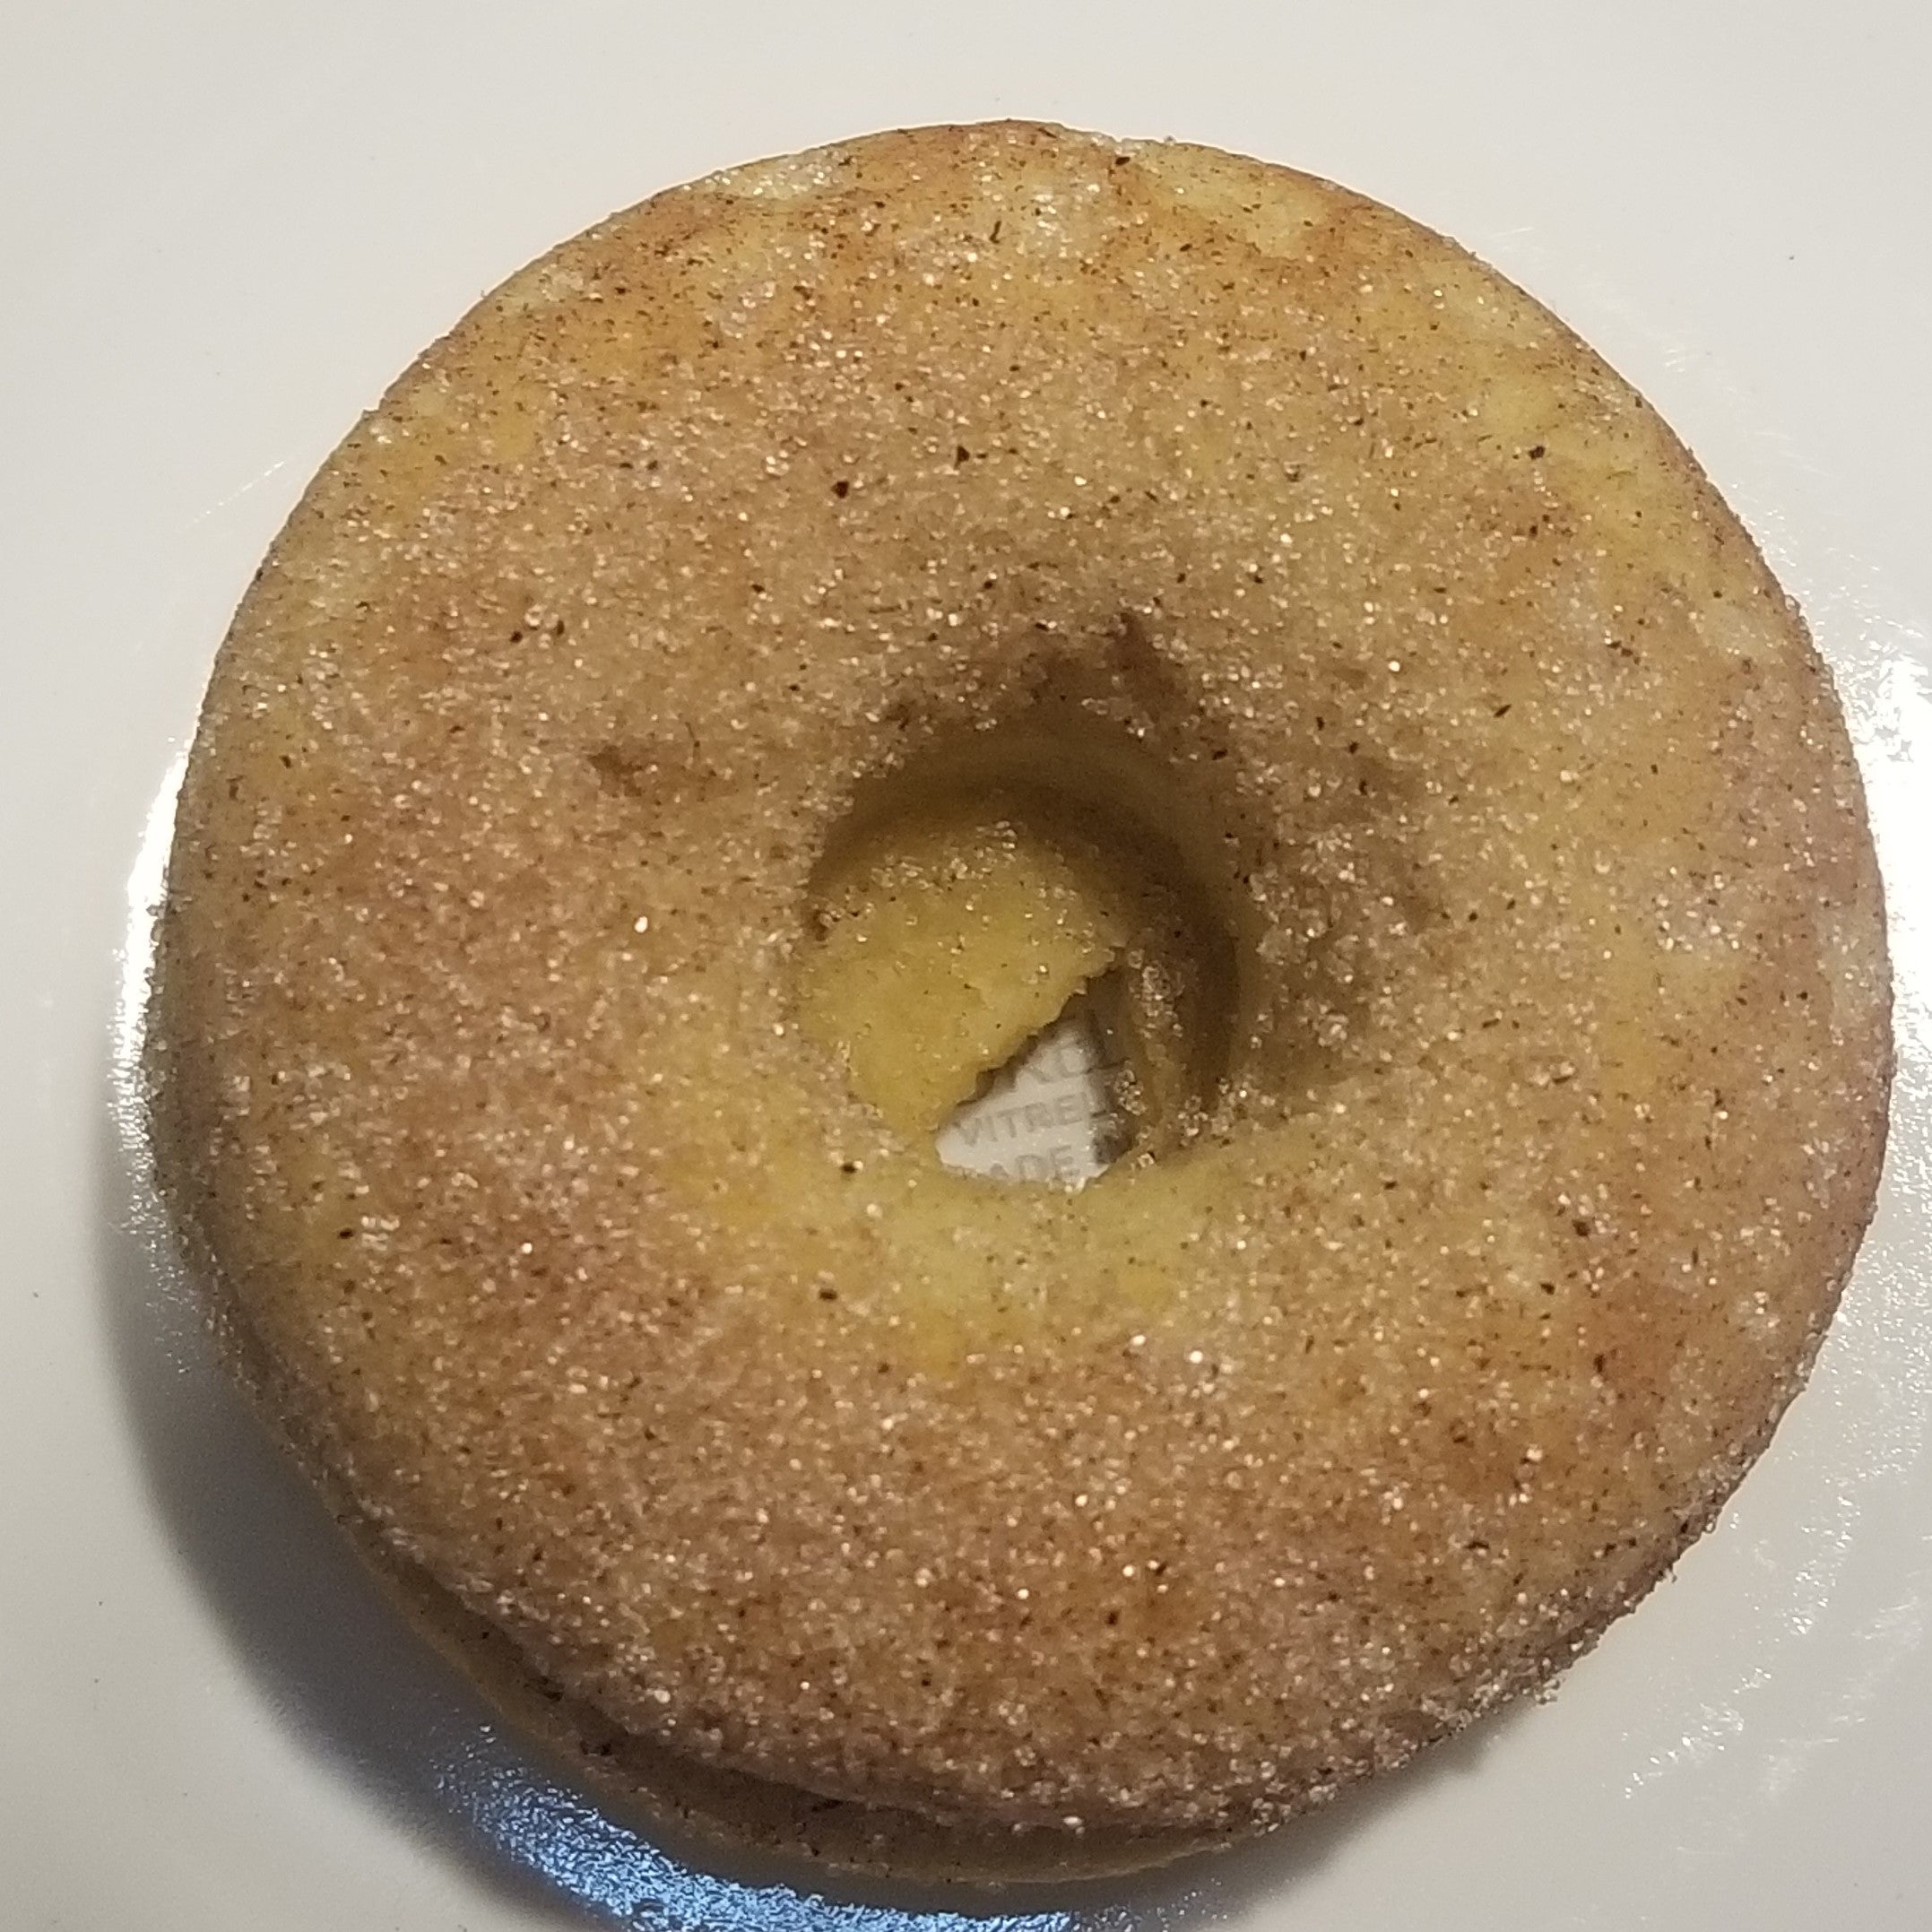 Lo-Ca Cinnamon Sugar Donut (Calories 238 Net Carbs 3)